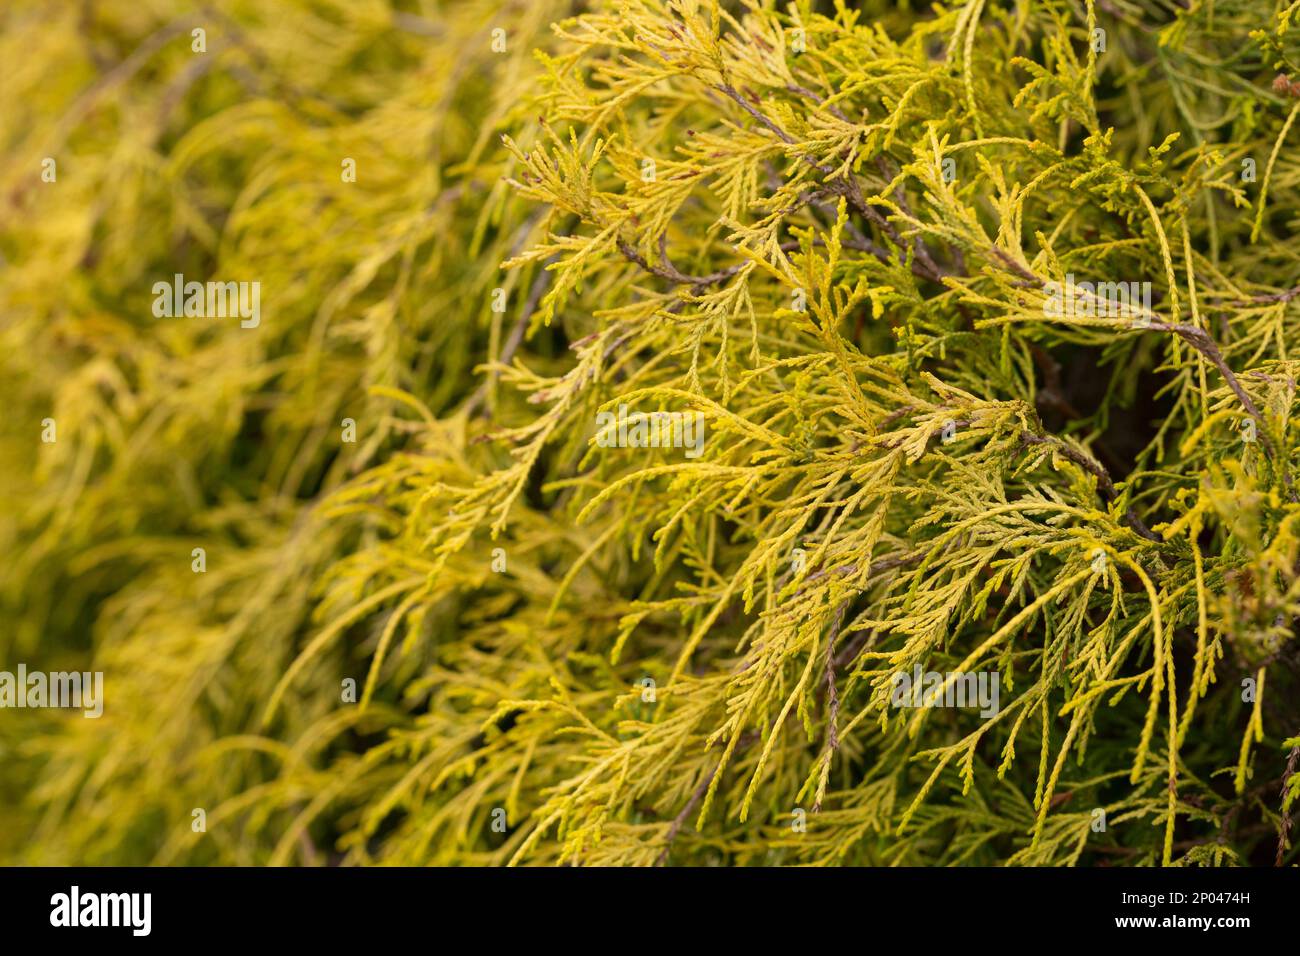 Gold dwarf threadleaf false cypress Chamaecyparis pisifera Filifera Aurea Nana selective focus, natural background Stock Photo